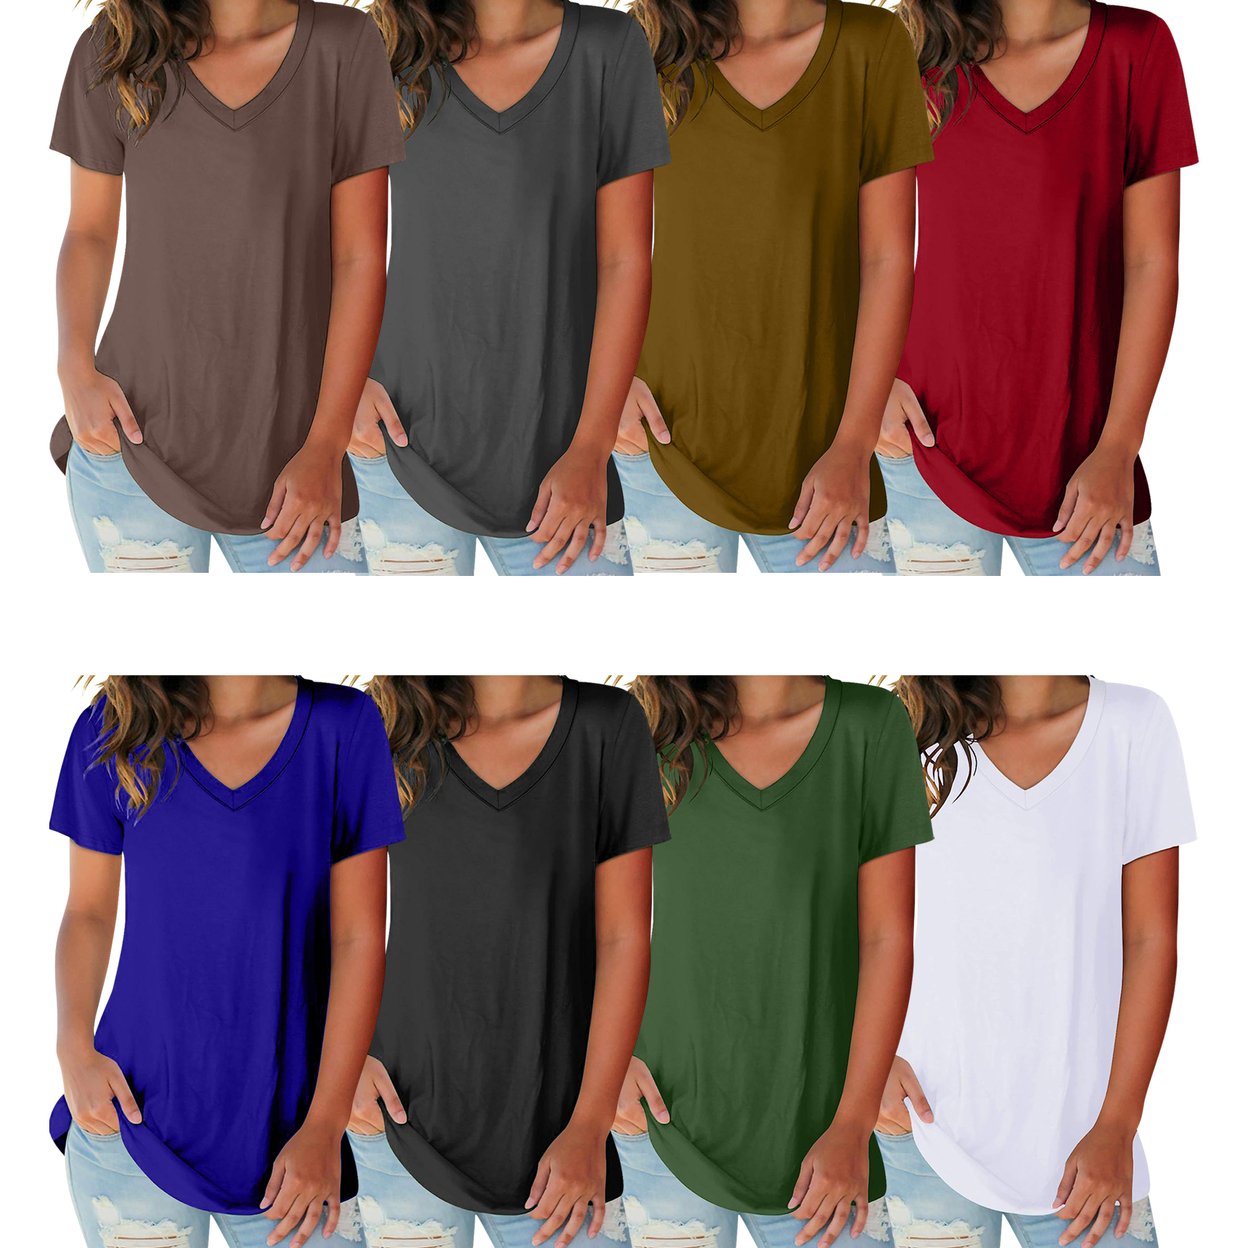 3-Pack: Women's Ultra Soft Smooth Cotton Blend Basic V-Neck Short Sleeve Shirts - Black, Grey Mustard, Large